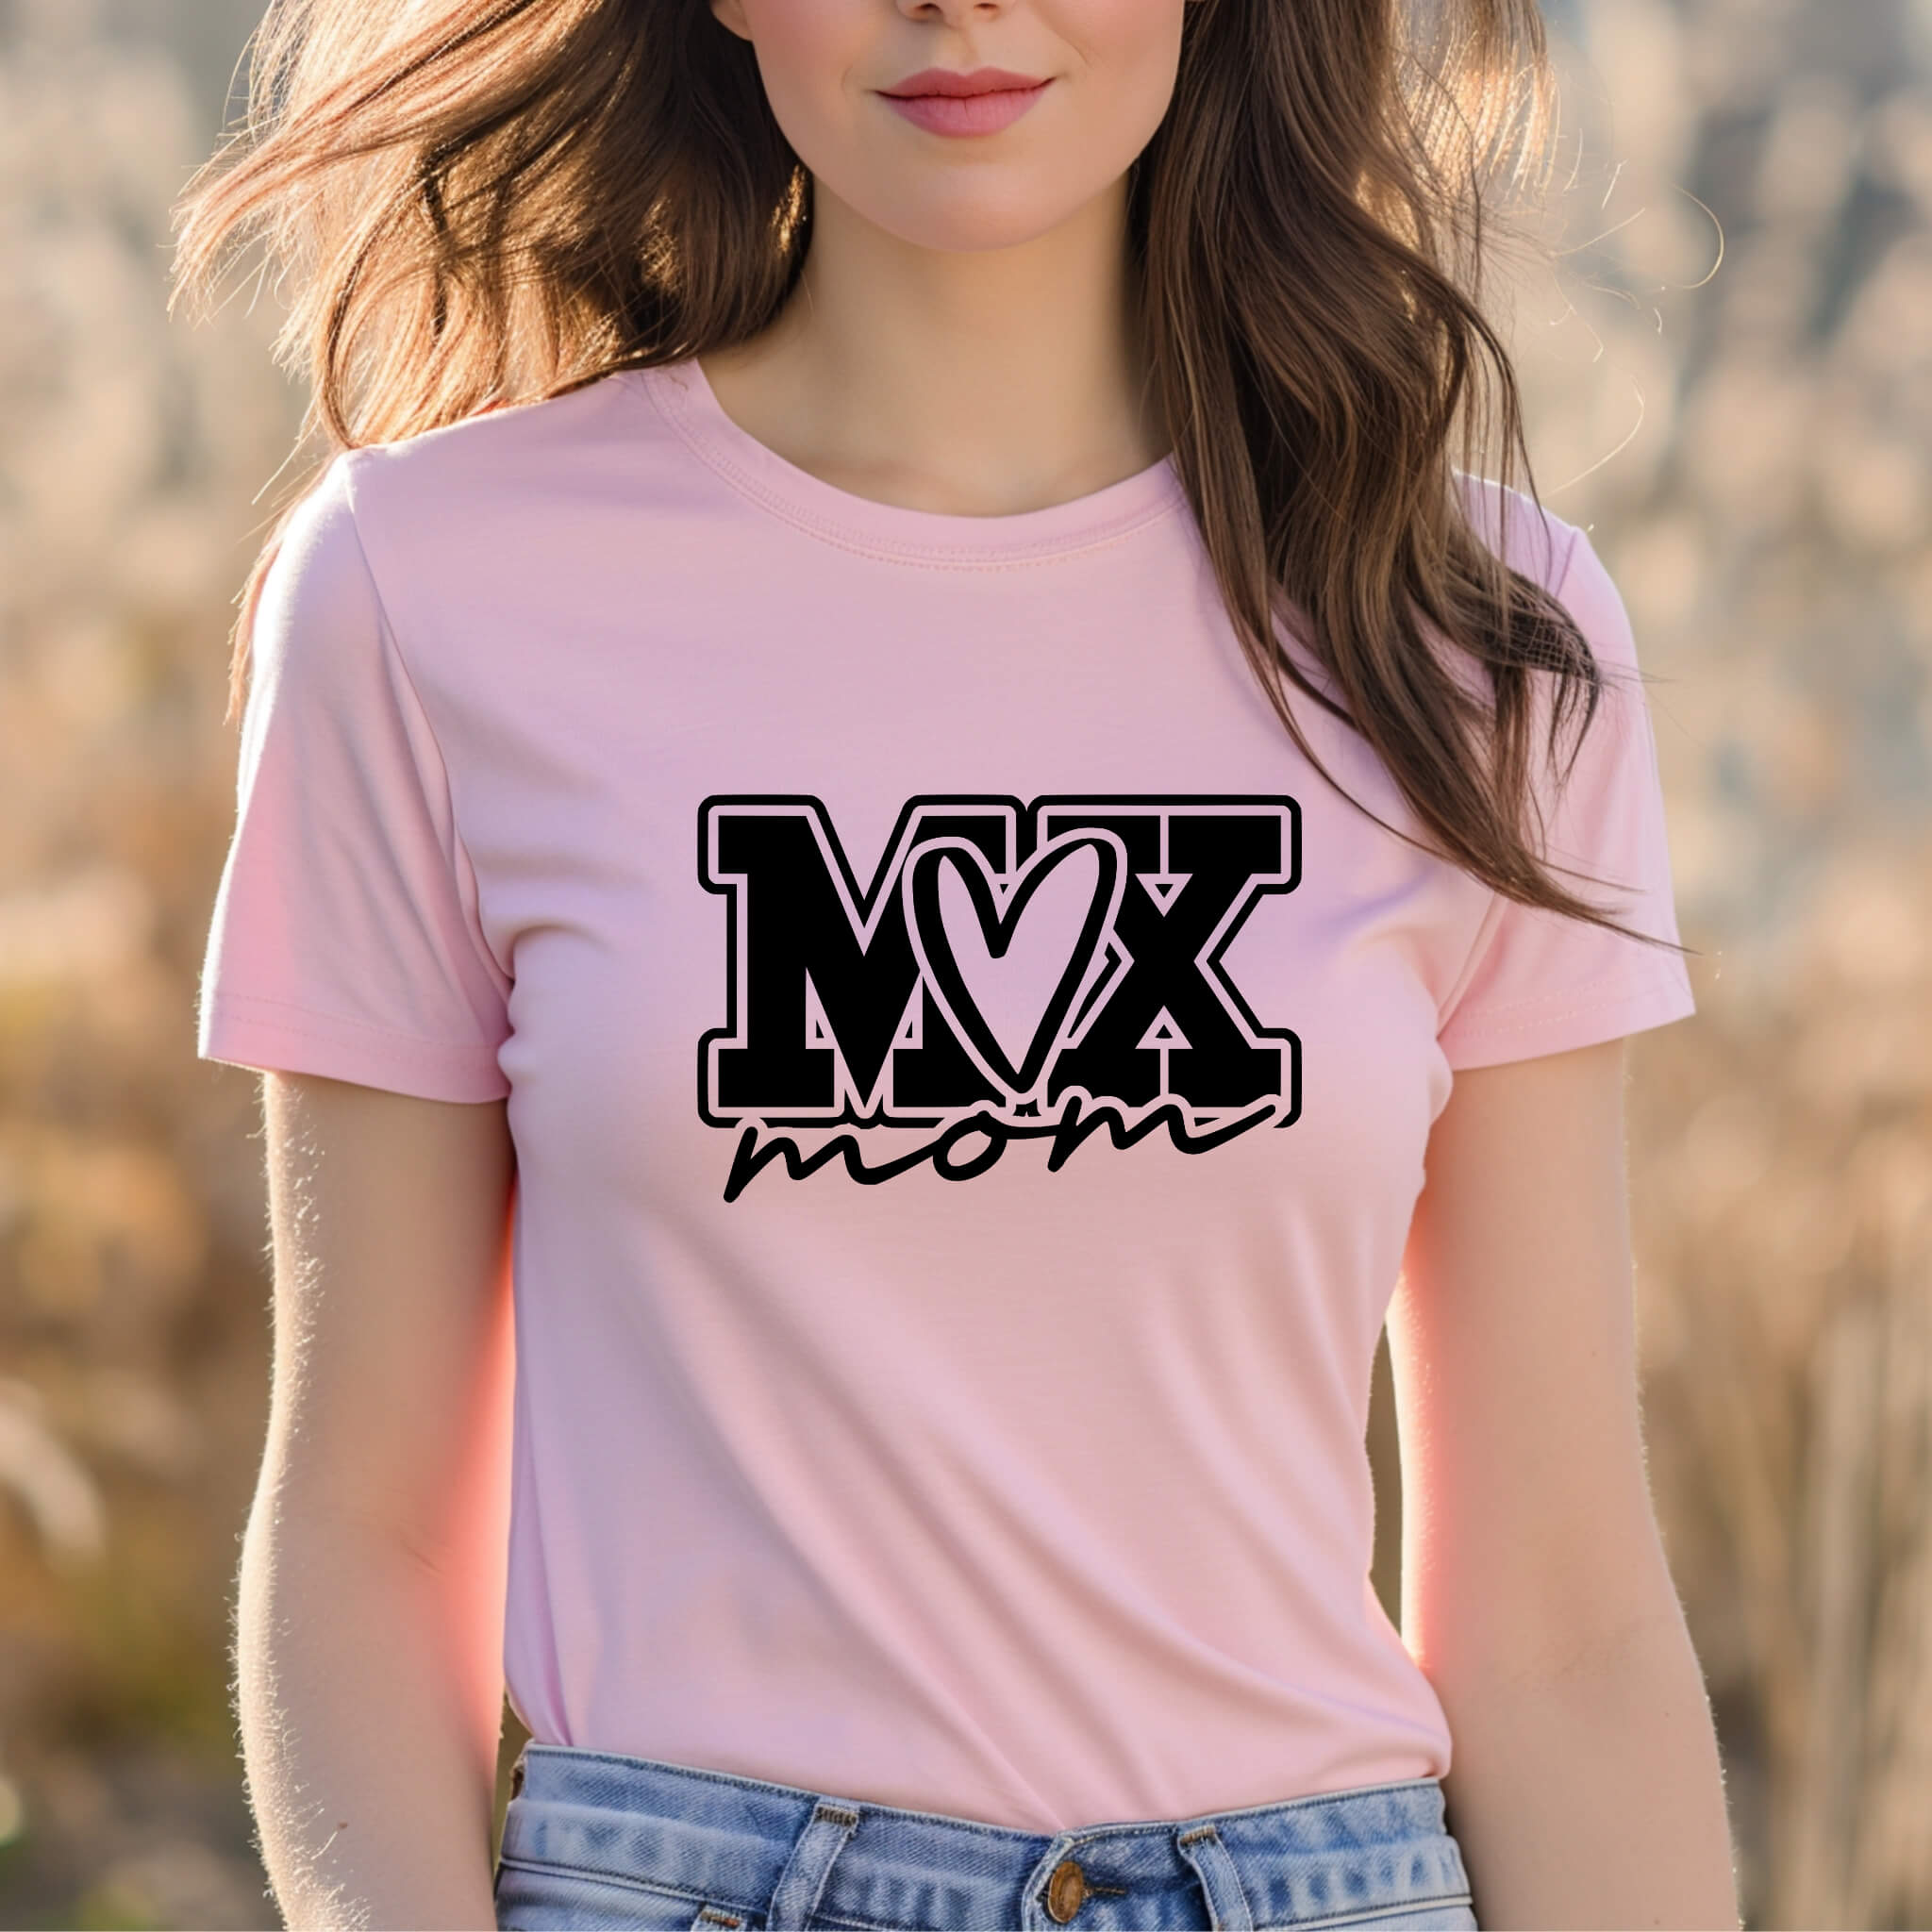 Racing - MX Mom Motocross Dirt Bike Graphic Print Women’s T-Shirt